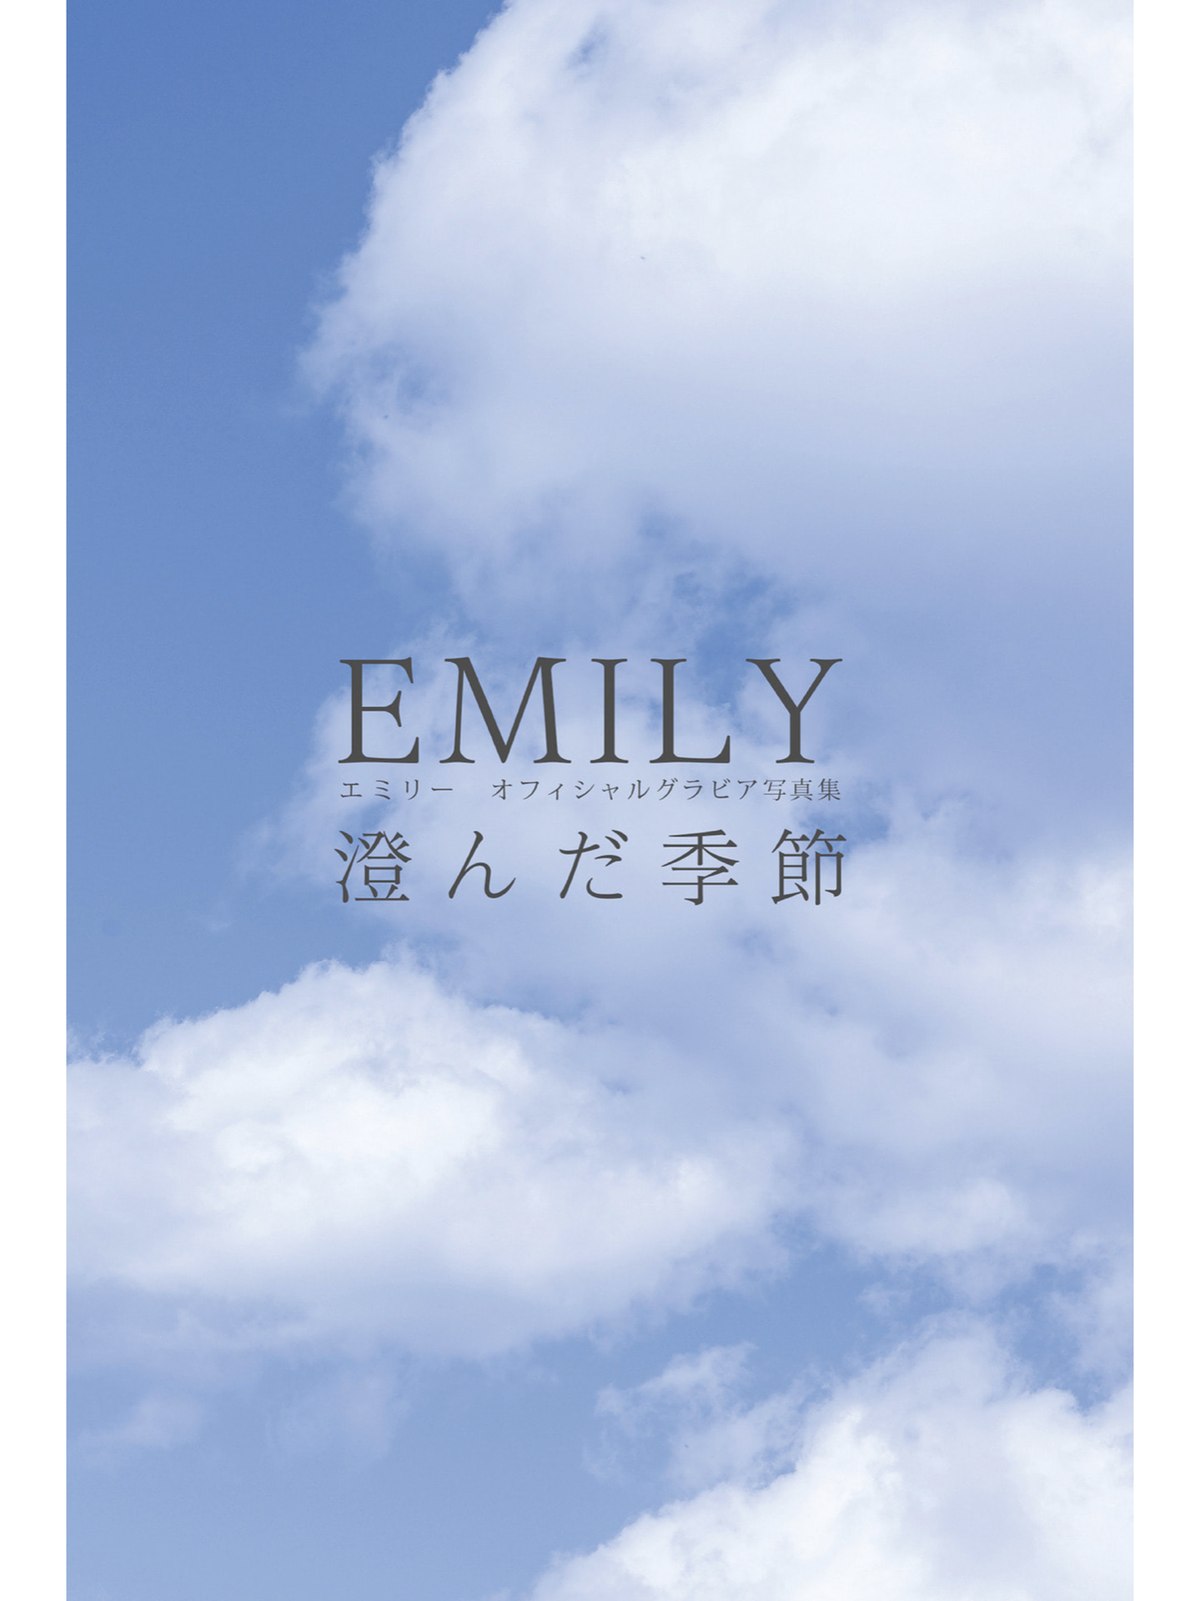 Photobook EMILY Official Gravure Photo Book Clear Season 0056 7448583792.jpg